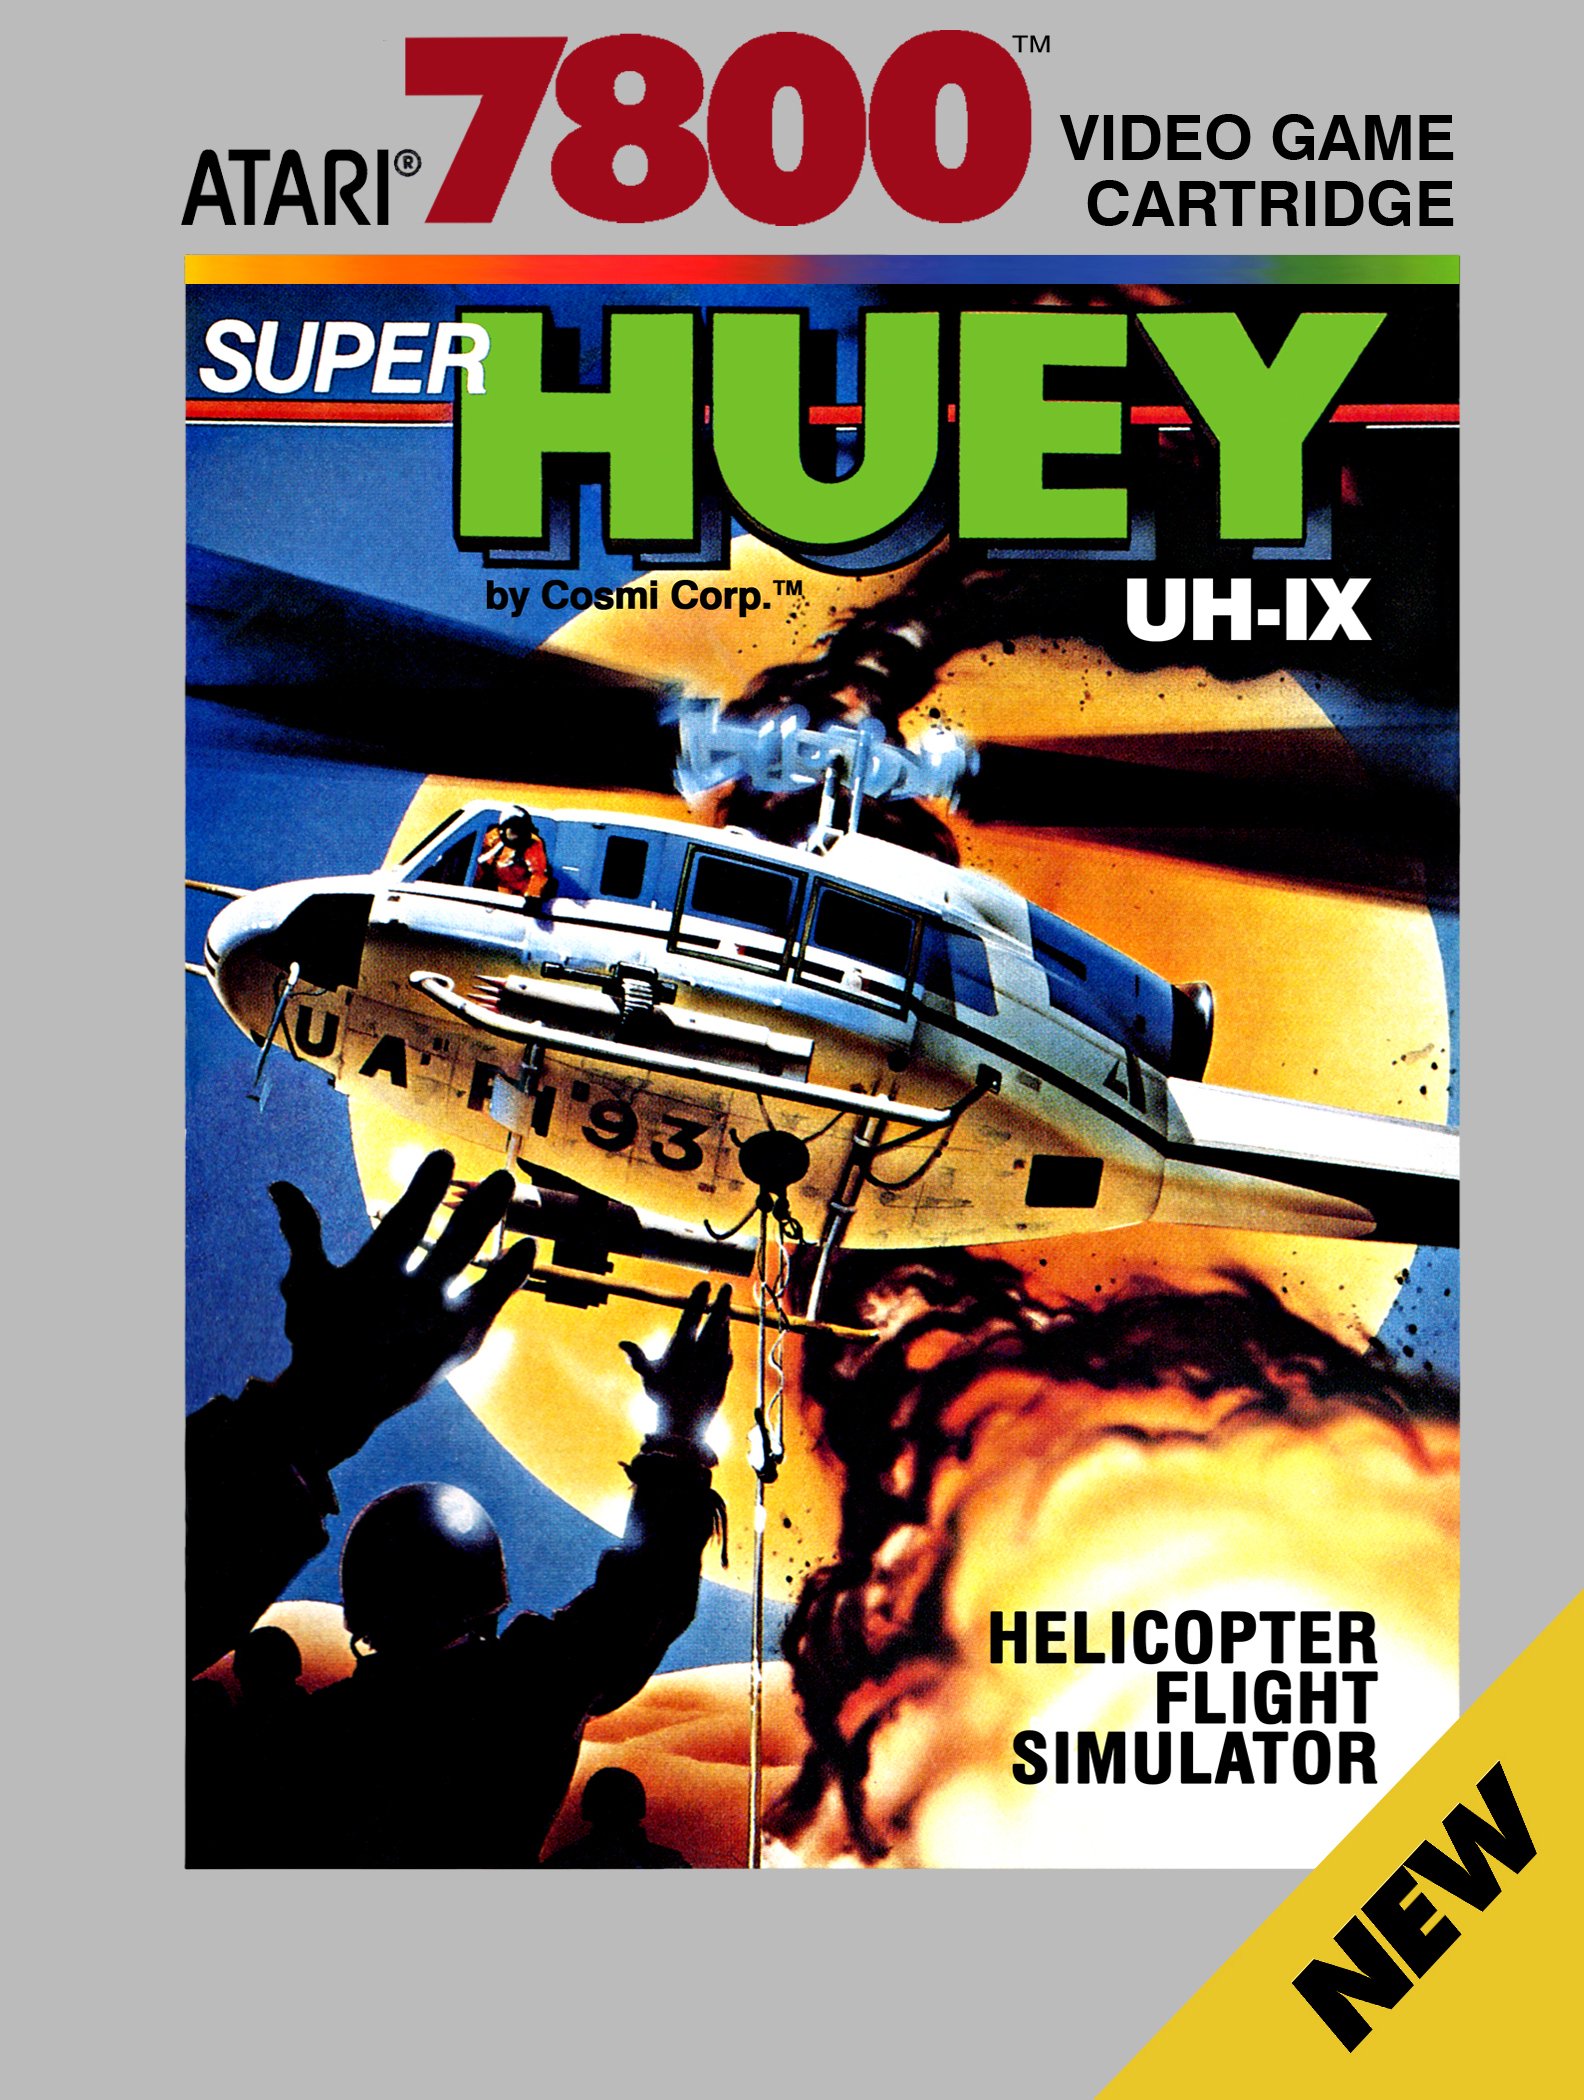 Image of Super Huey UH-IX